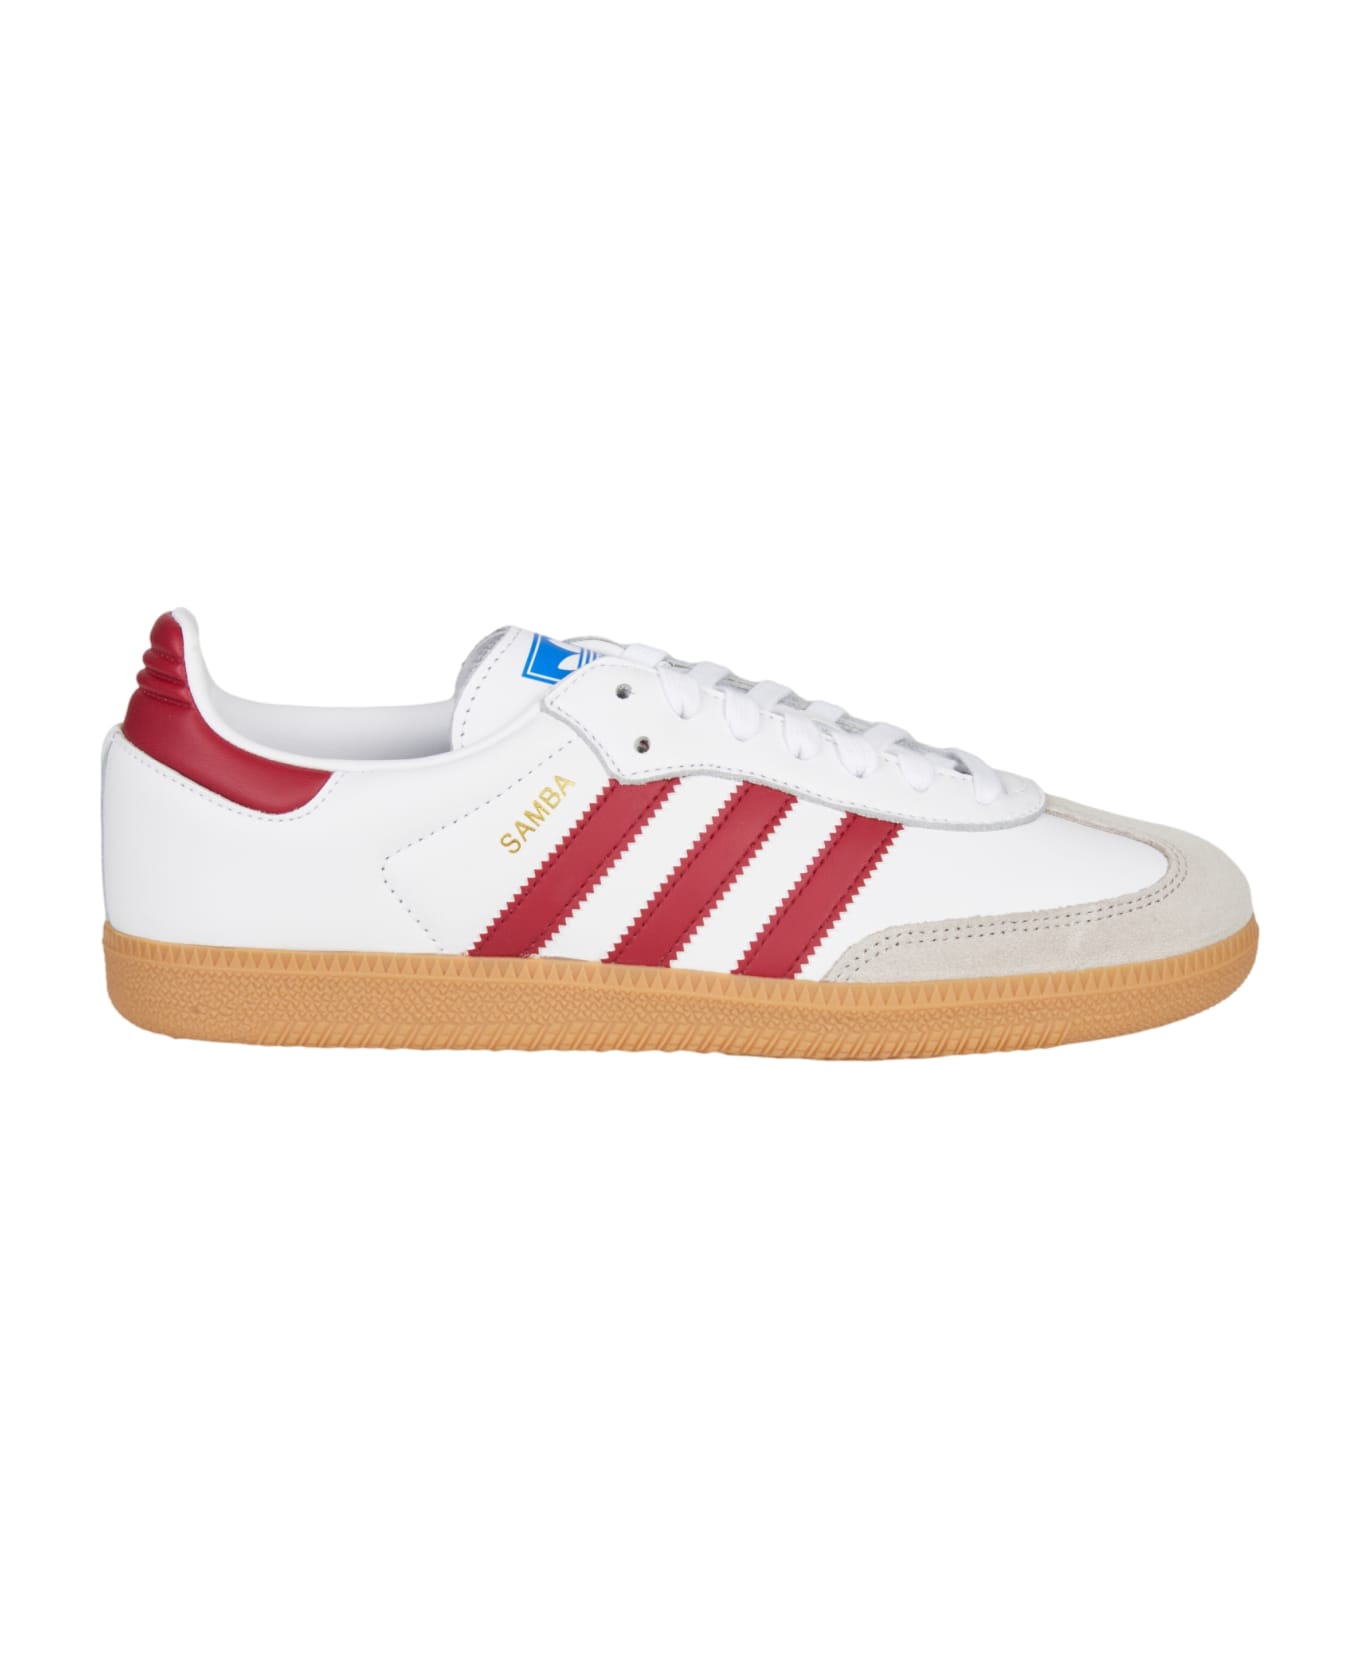 Adidas Samba Og Sneakers - White/Red